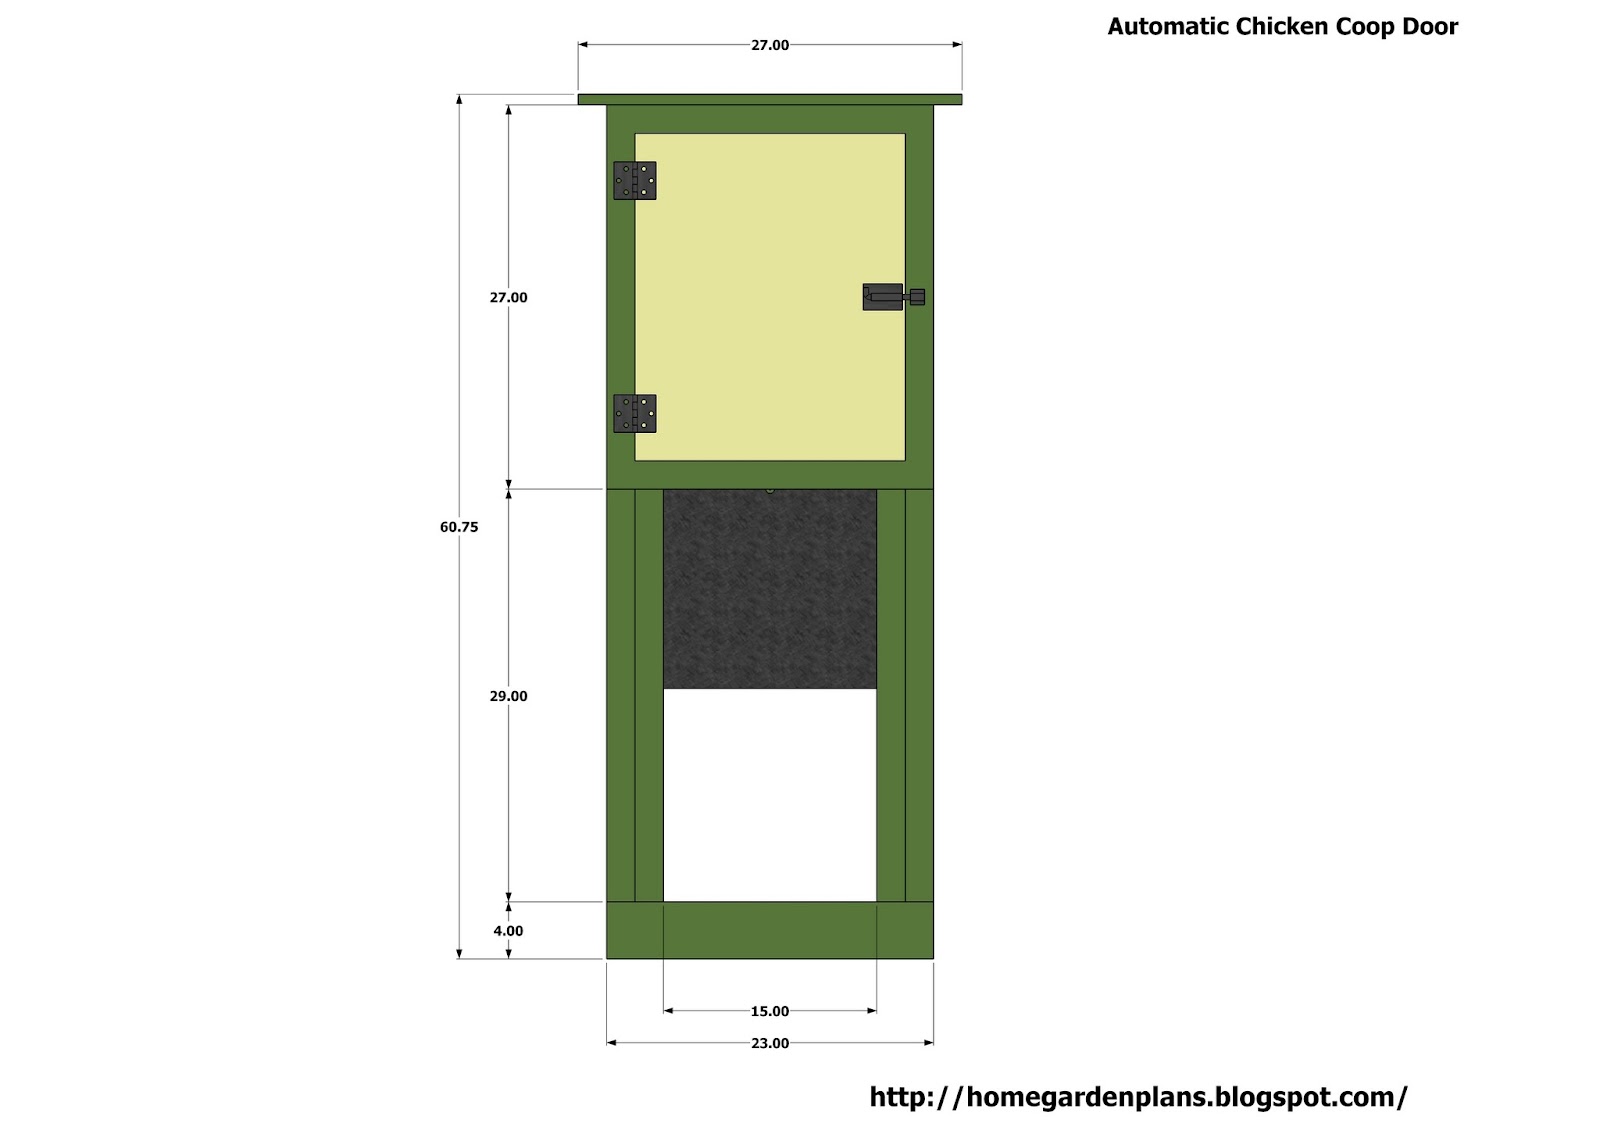  Chicken Coop Plans - Chicken Coop Design - How To Build A Chicken Coop